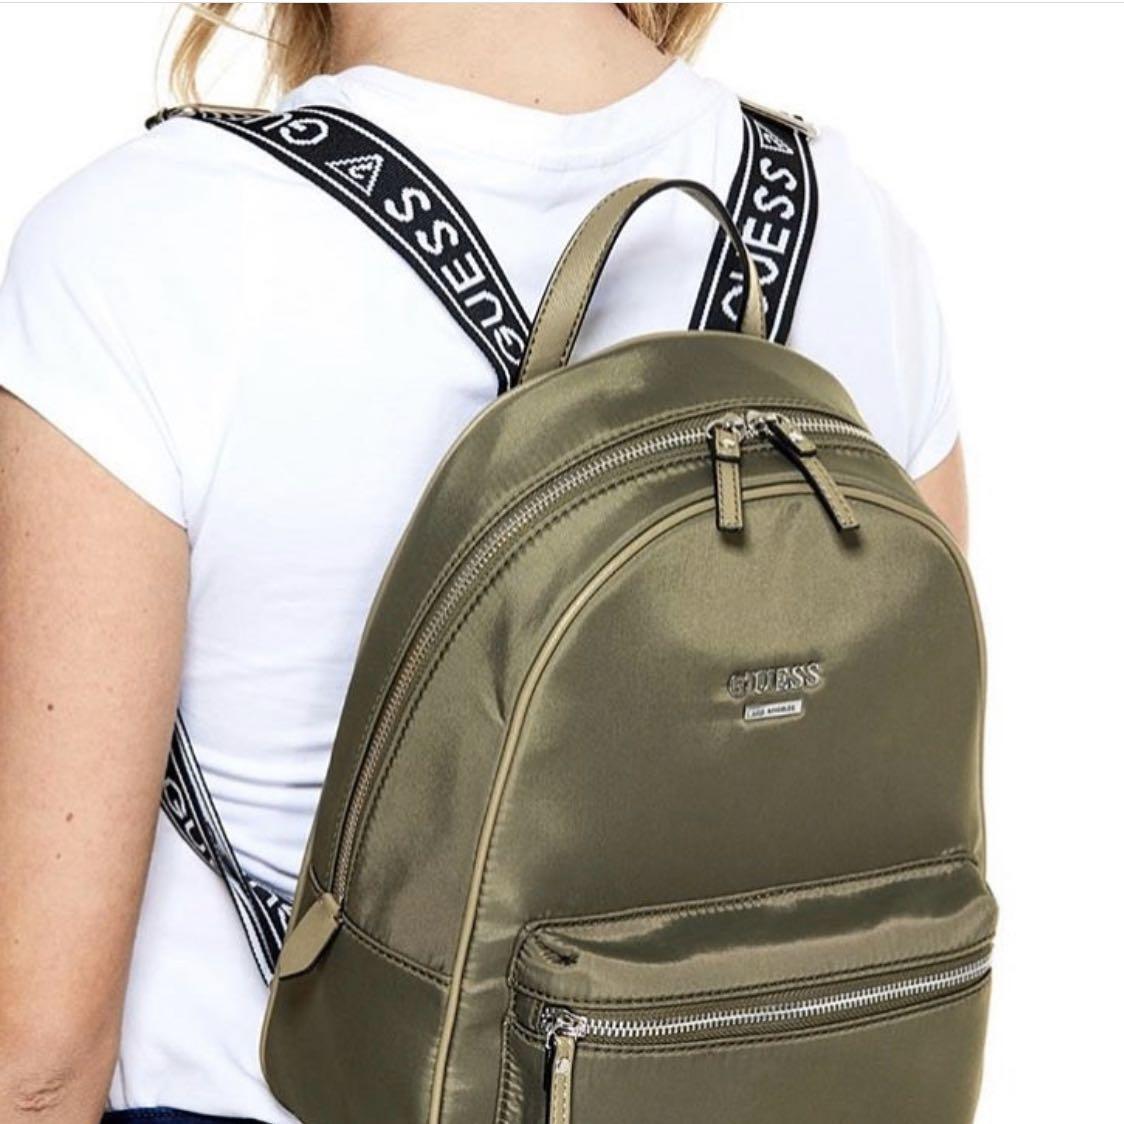 NEW GUESS Women's Logo Medium Backpack Bag Handbag Purse - Stone | eBay